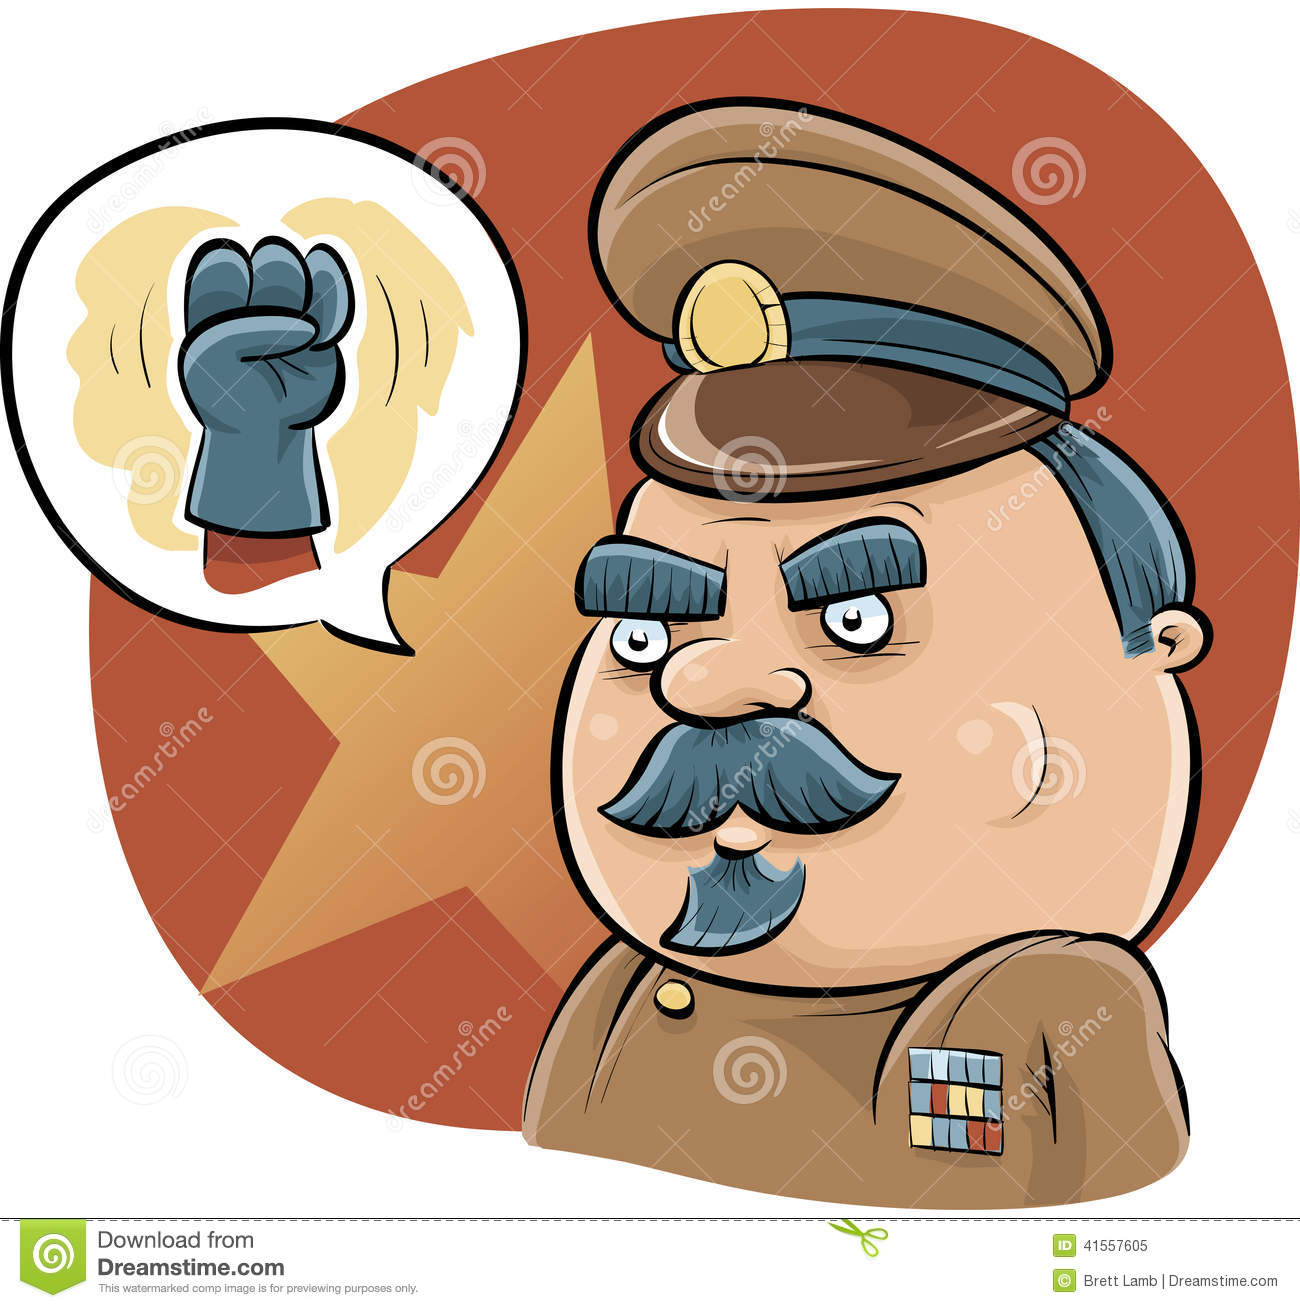 dictator-fist-cartoon-talks-tough-41557605.jpg